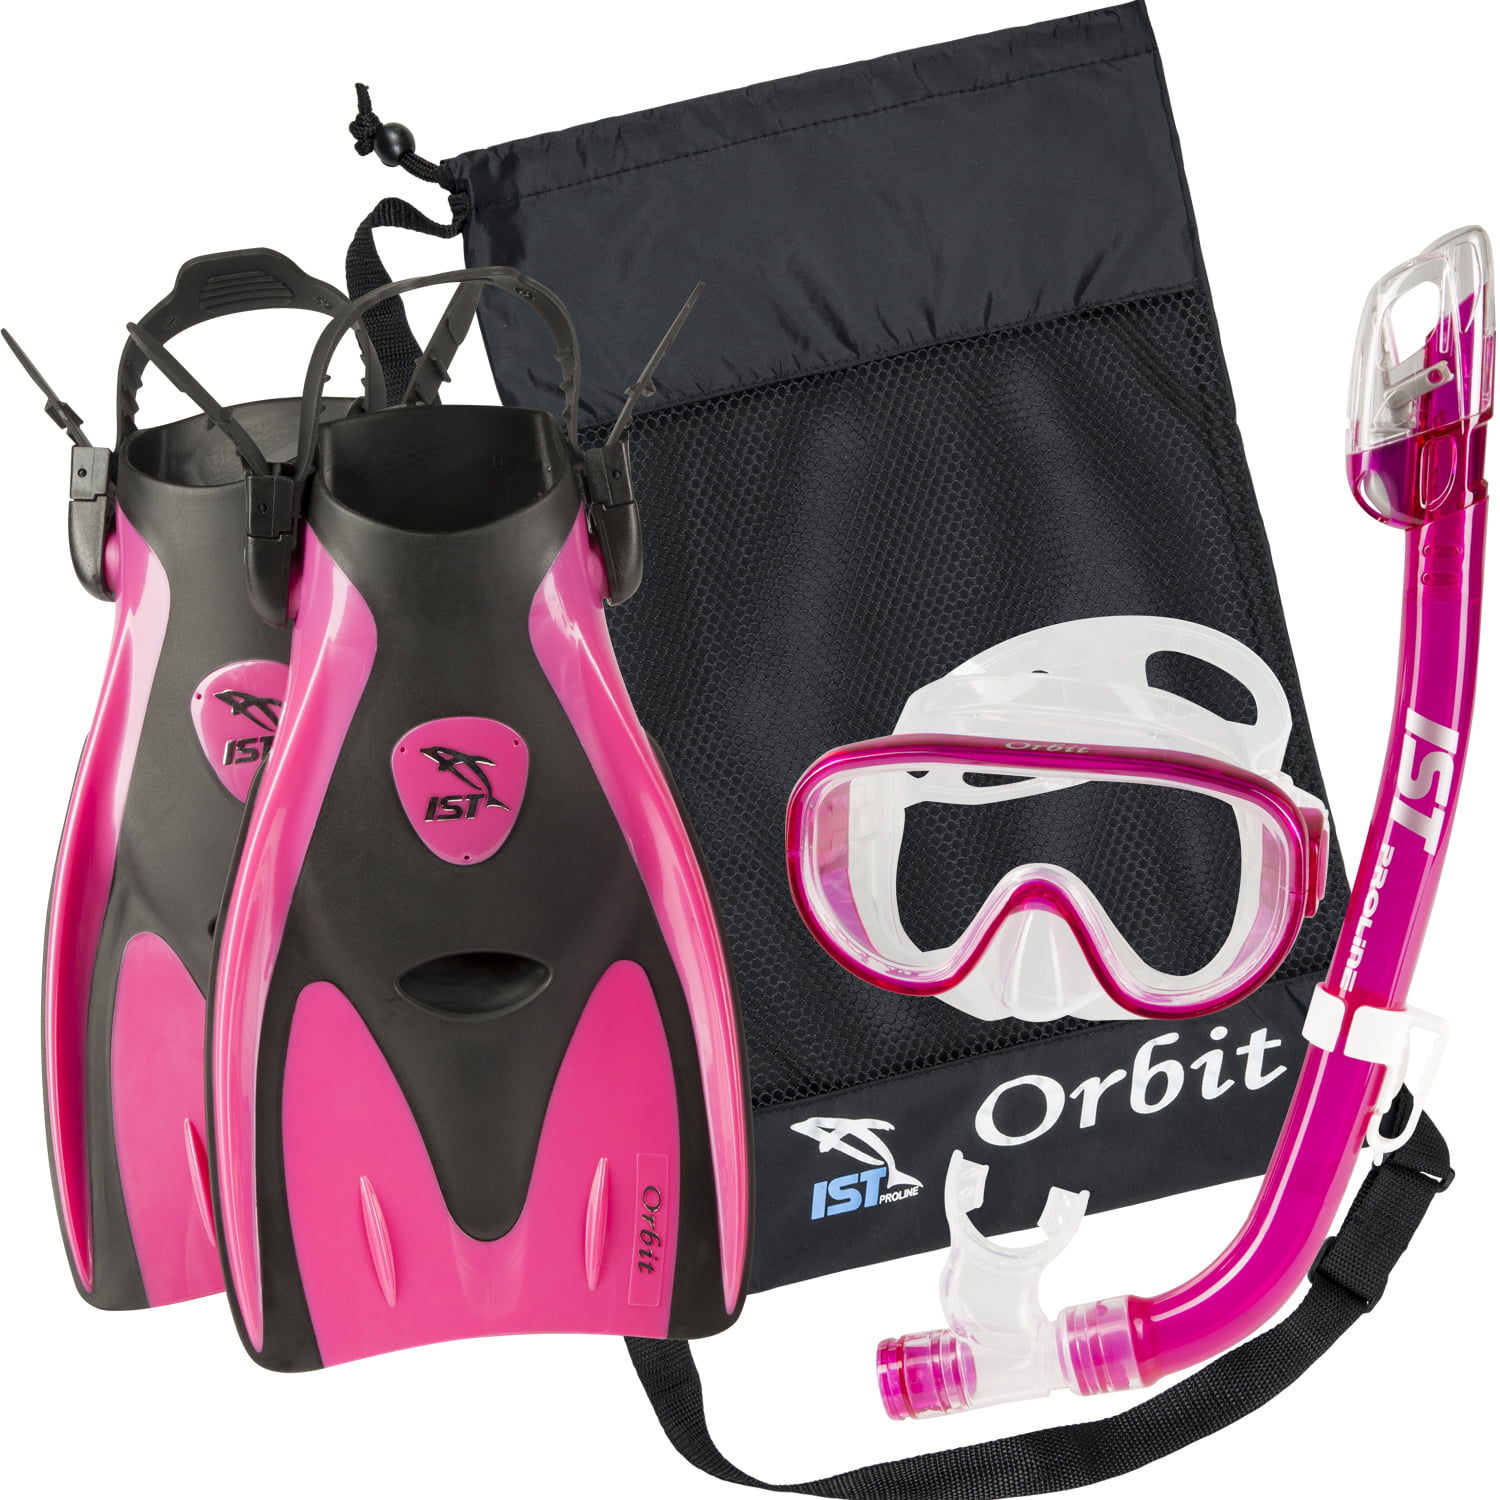 Dry Top Snorkel and Bag Fins Mask IST Orbit Premium Snorkel Set 